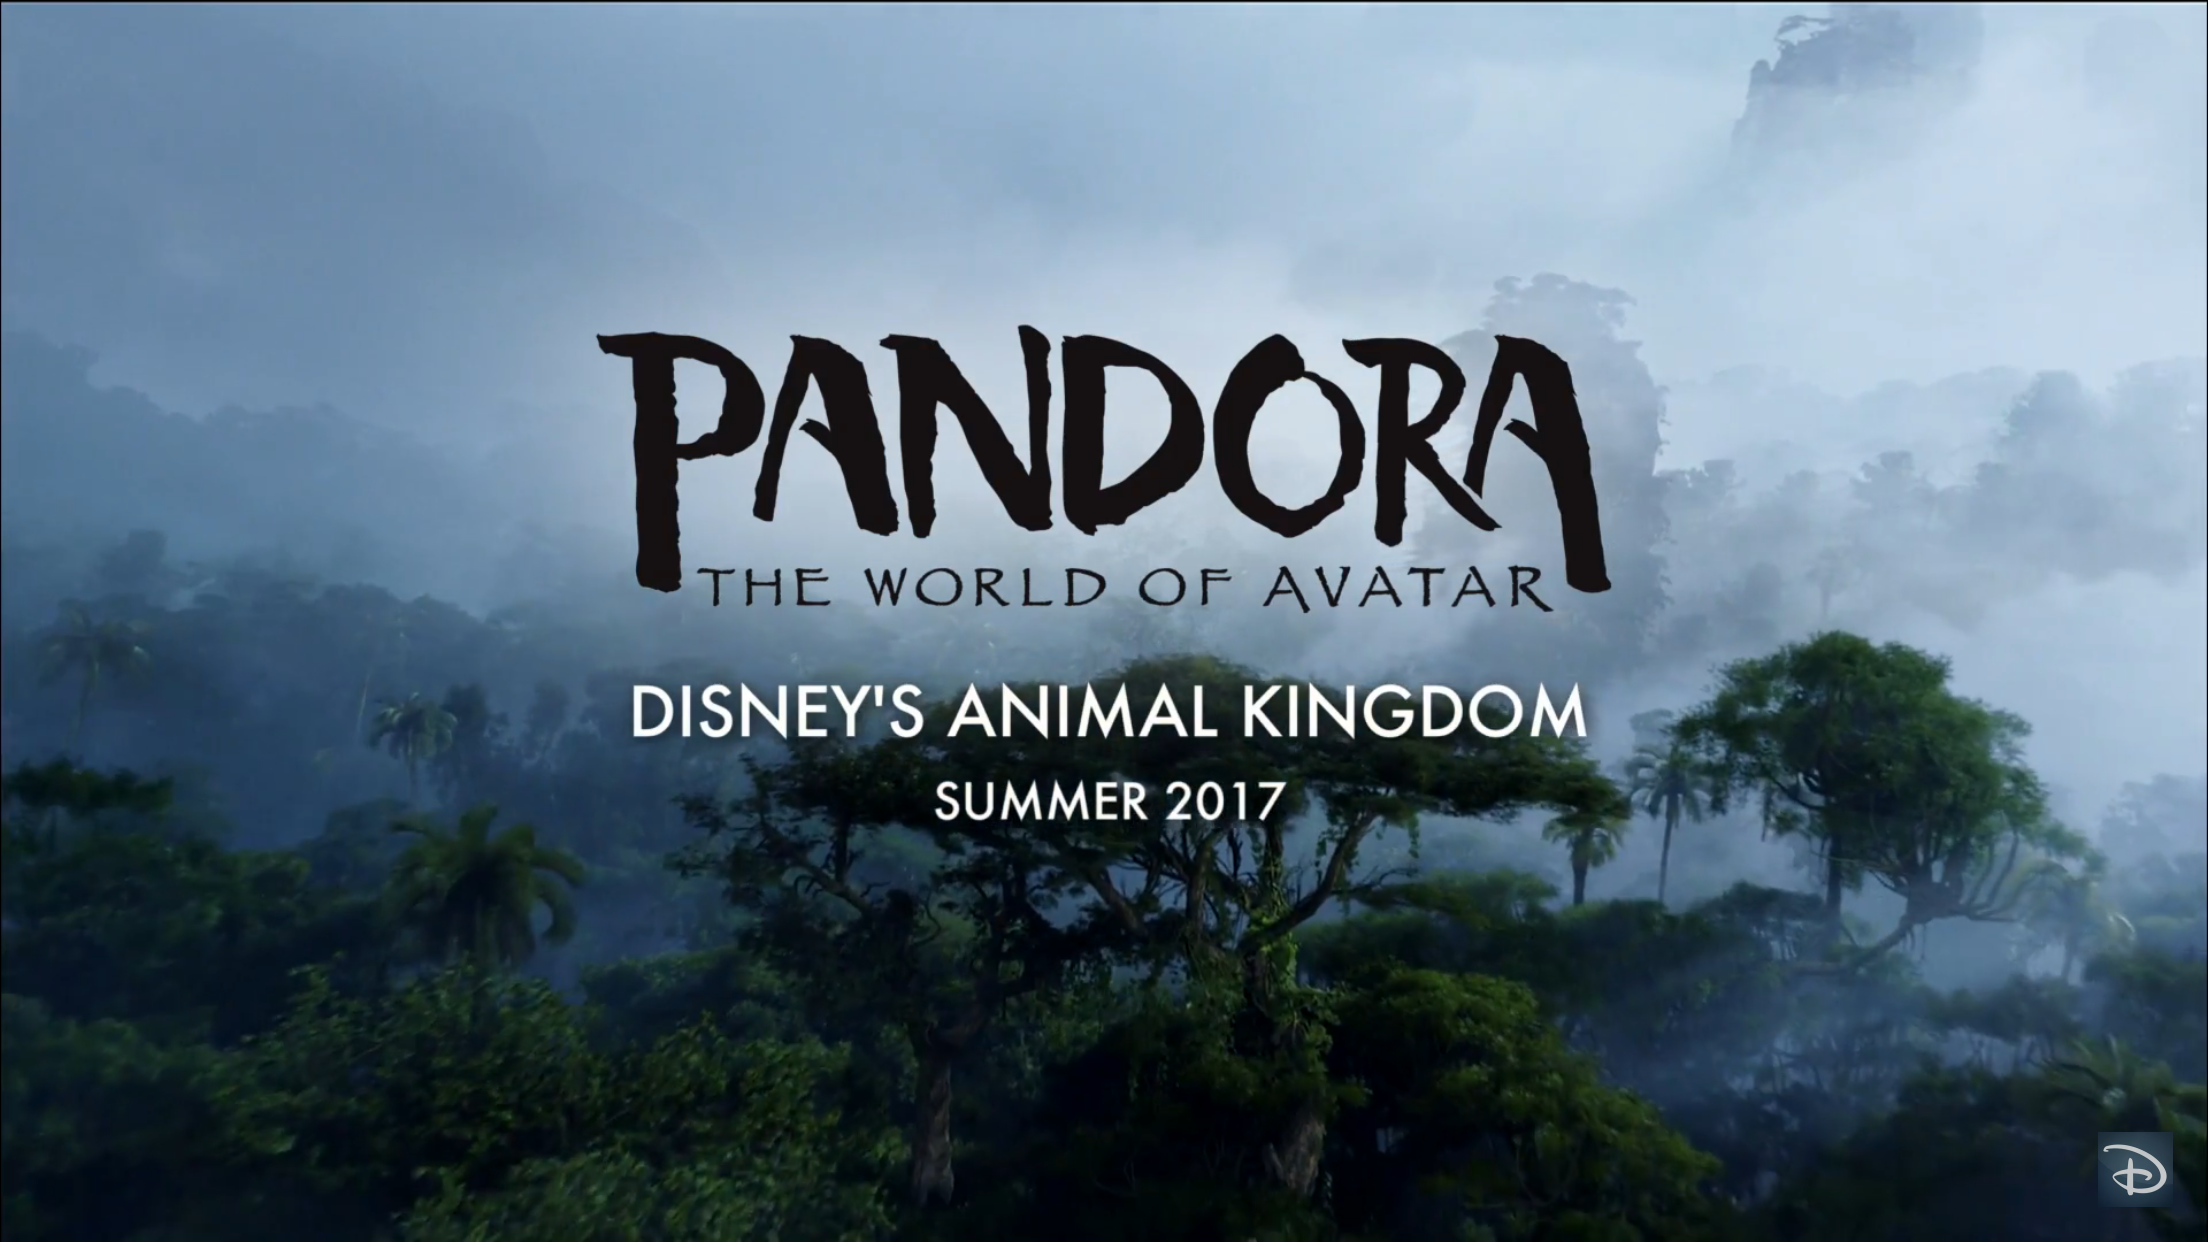 Аватар ворлд все открыто 1.80. Pandora: the World of avatar в Disney’s animal Kingdom. Дисней парк аватар. Pandora – the World of avatar.